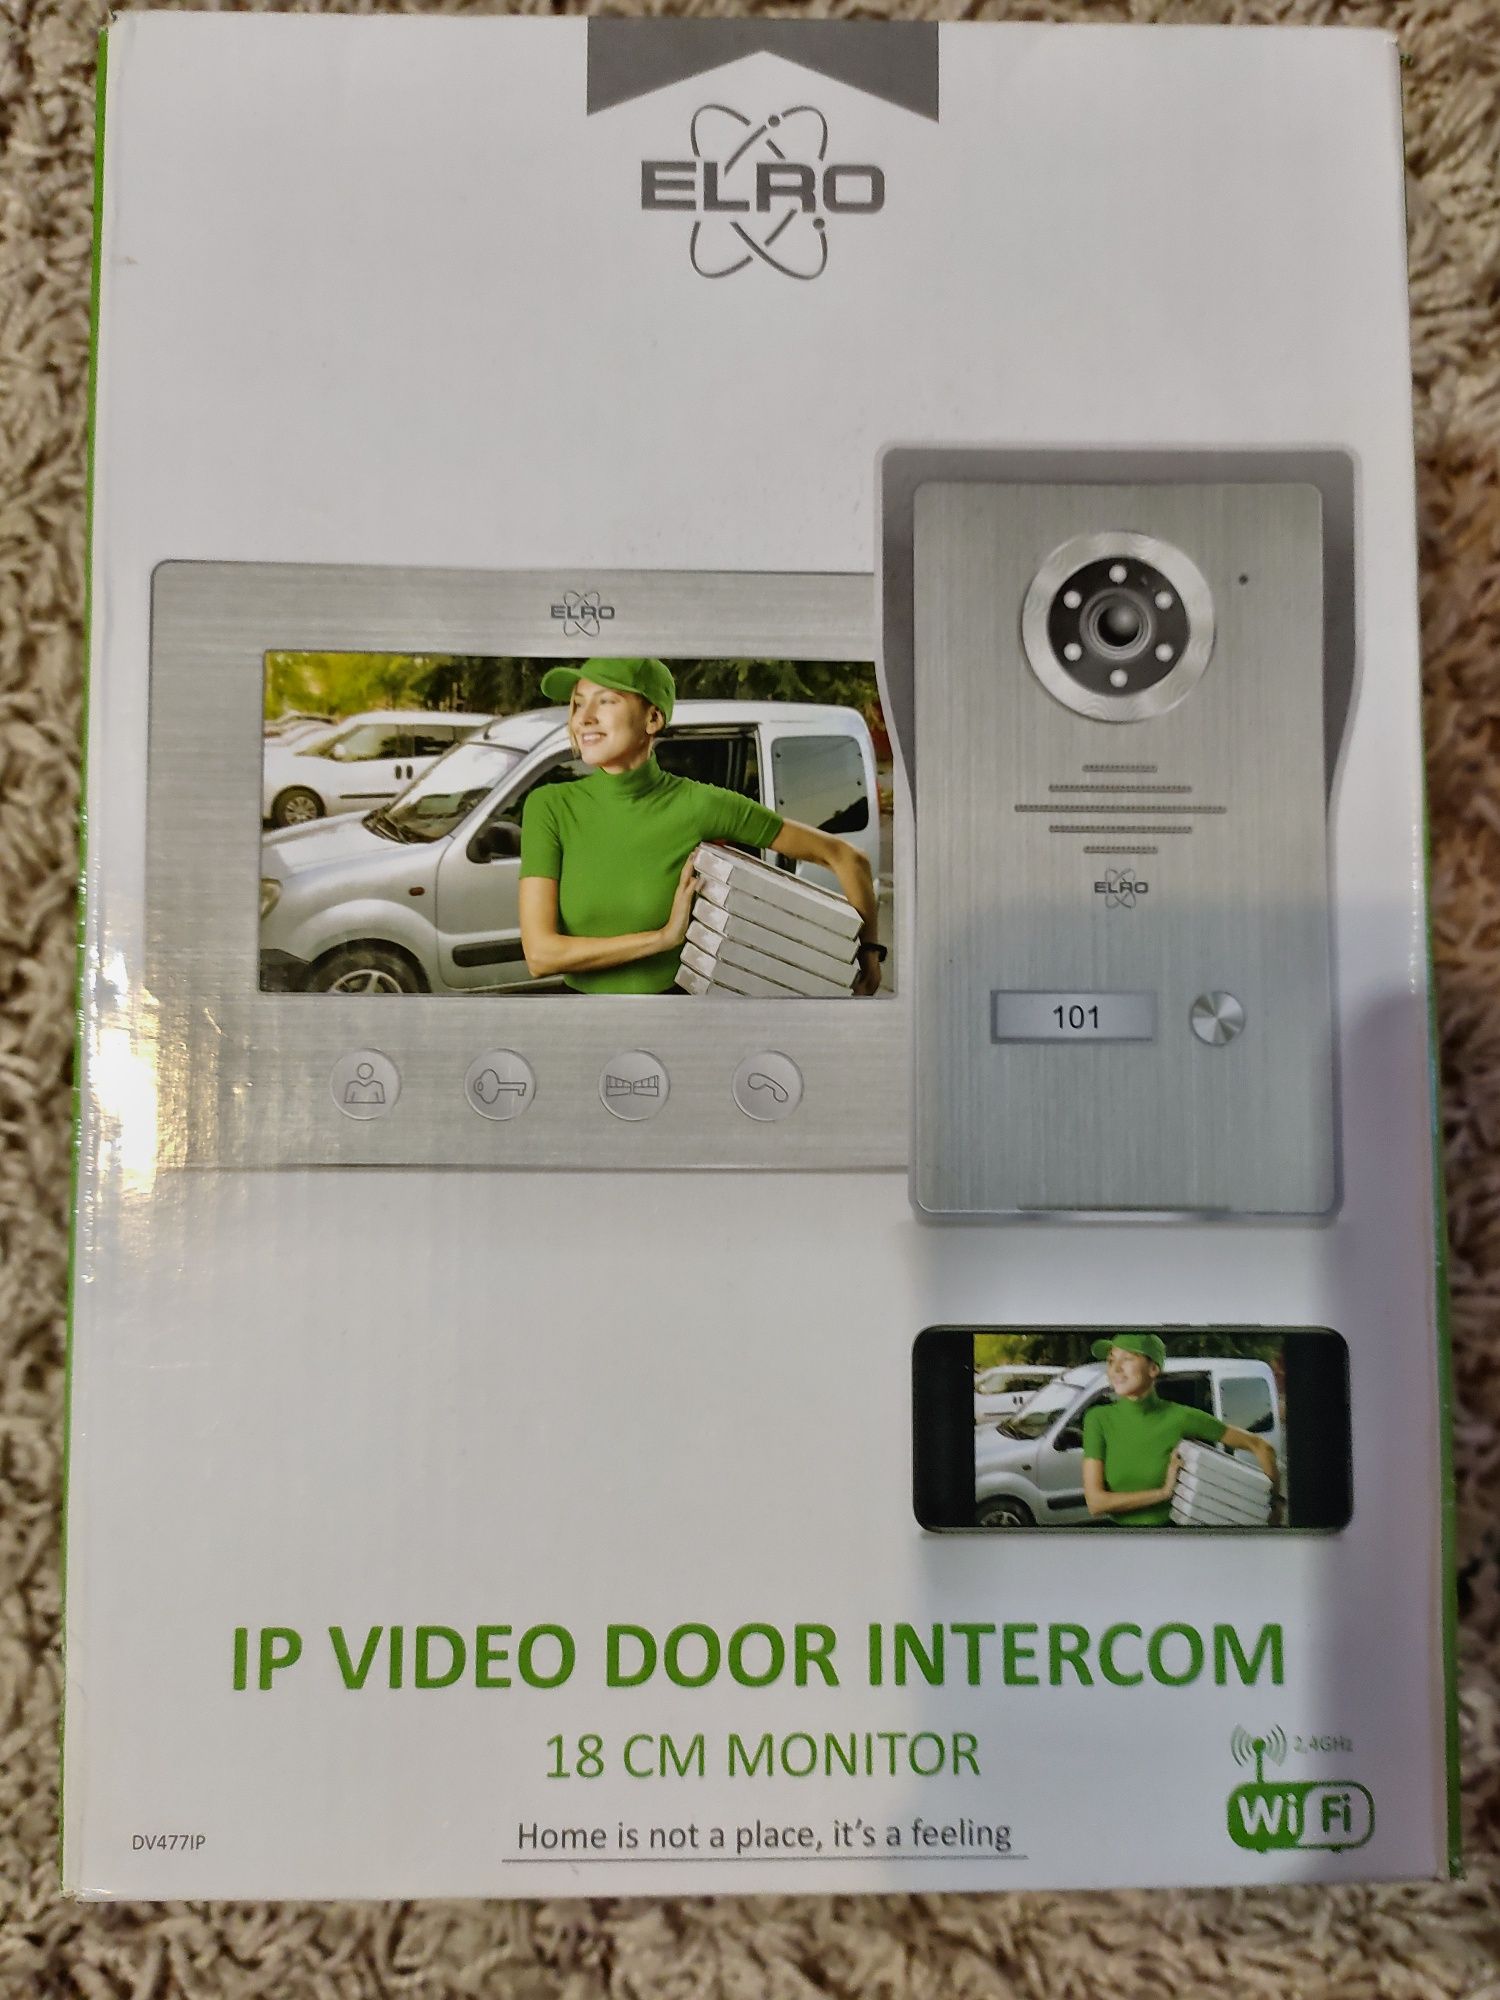 Домофон Elro WI-FI IP VIDEO DOOR Intercom (DV477IP) 18cm